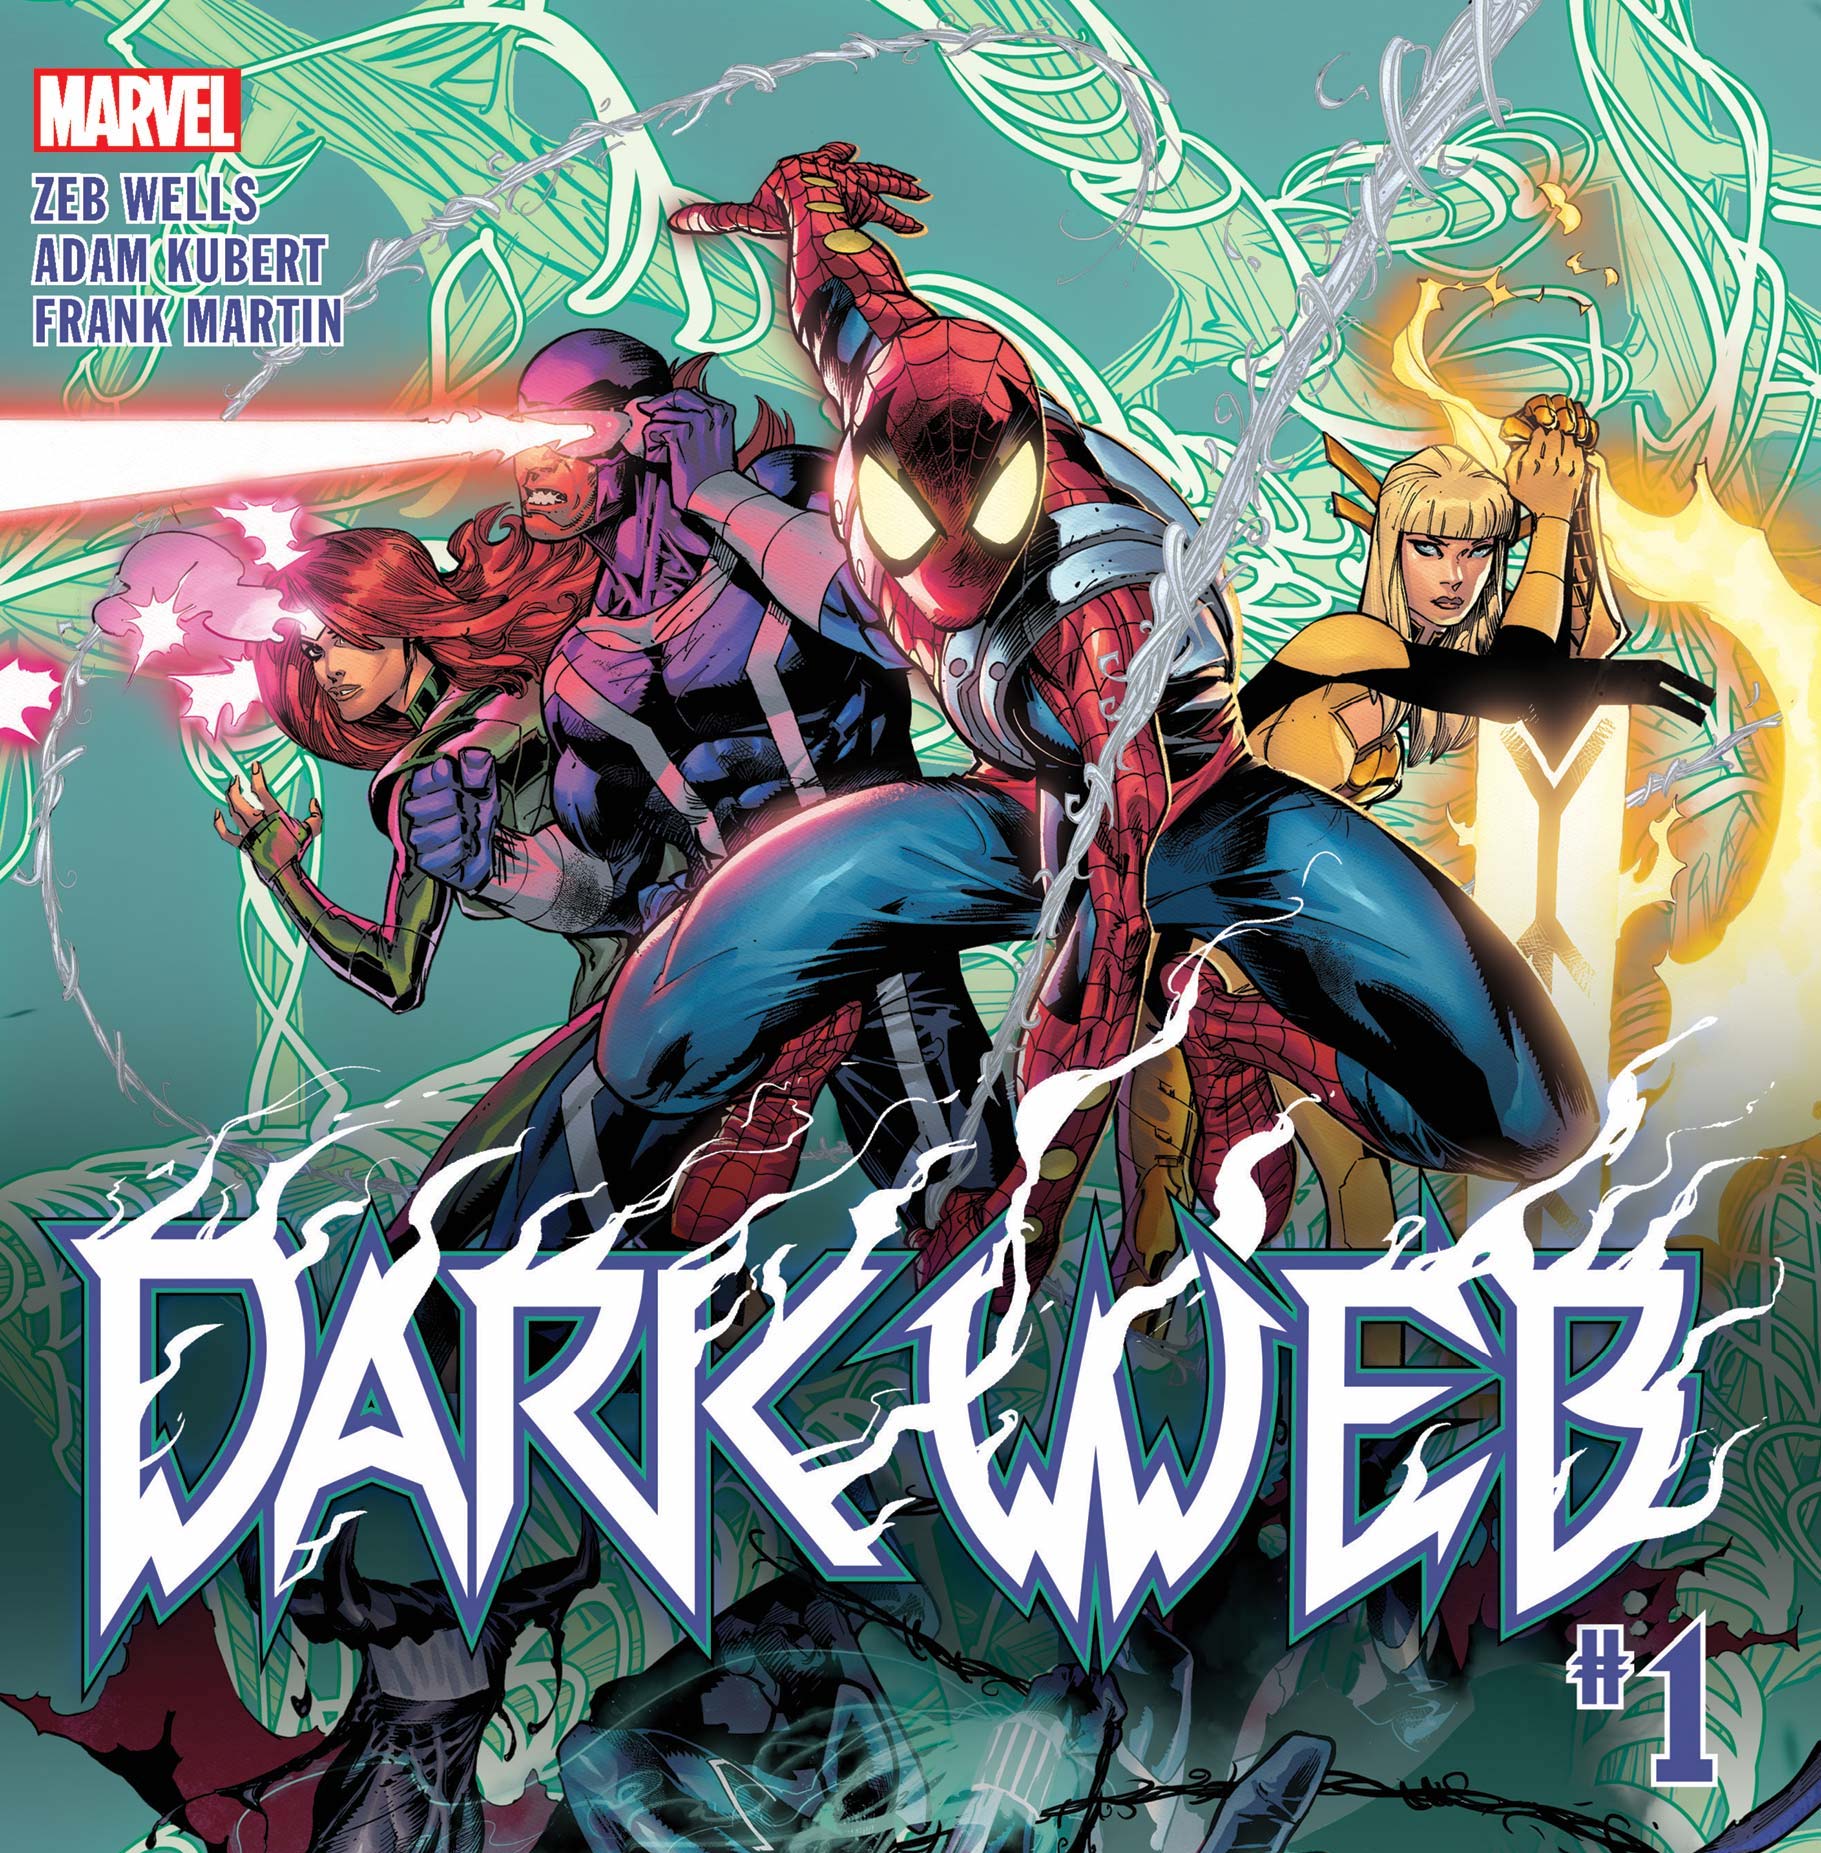 'Dark Web' #1 mixes Spider-Man, X-Men, and demons into an escapist adventure